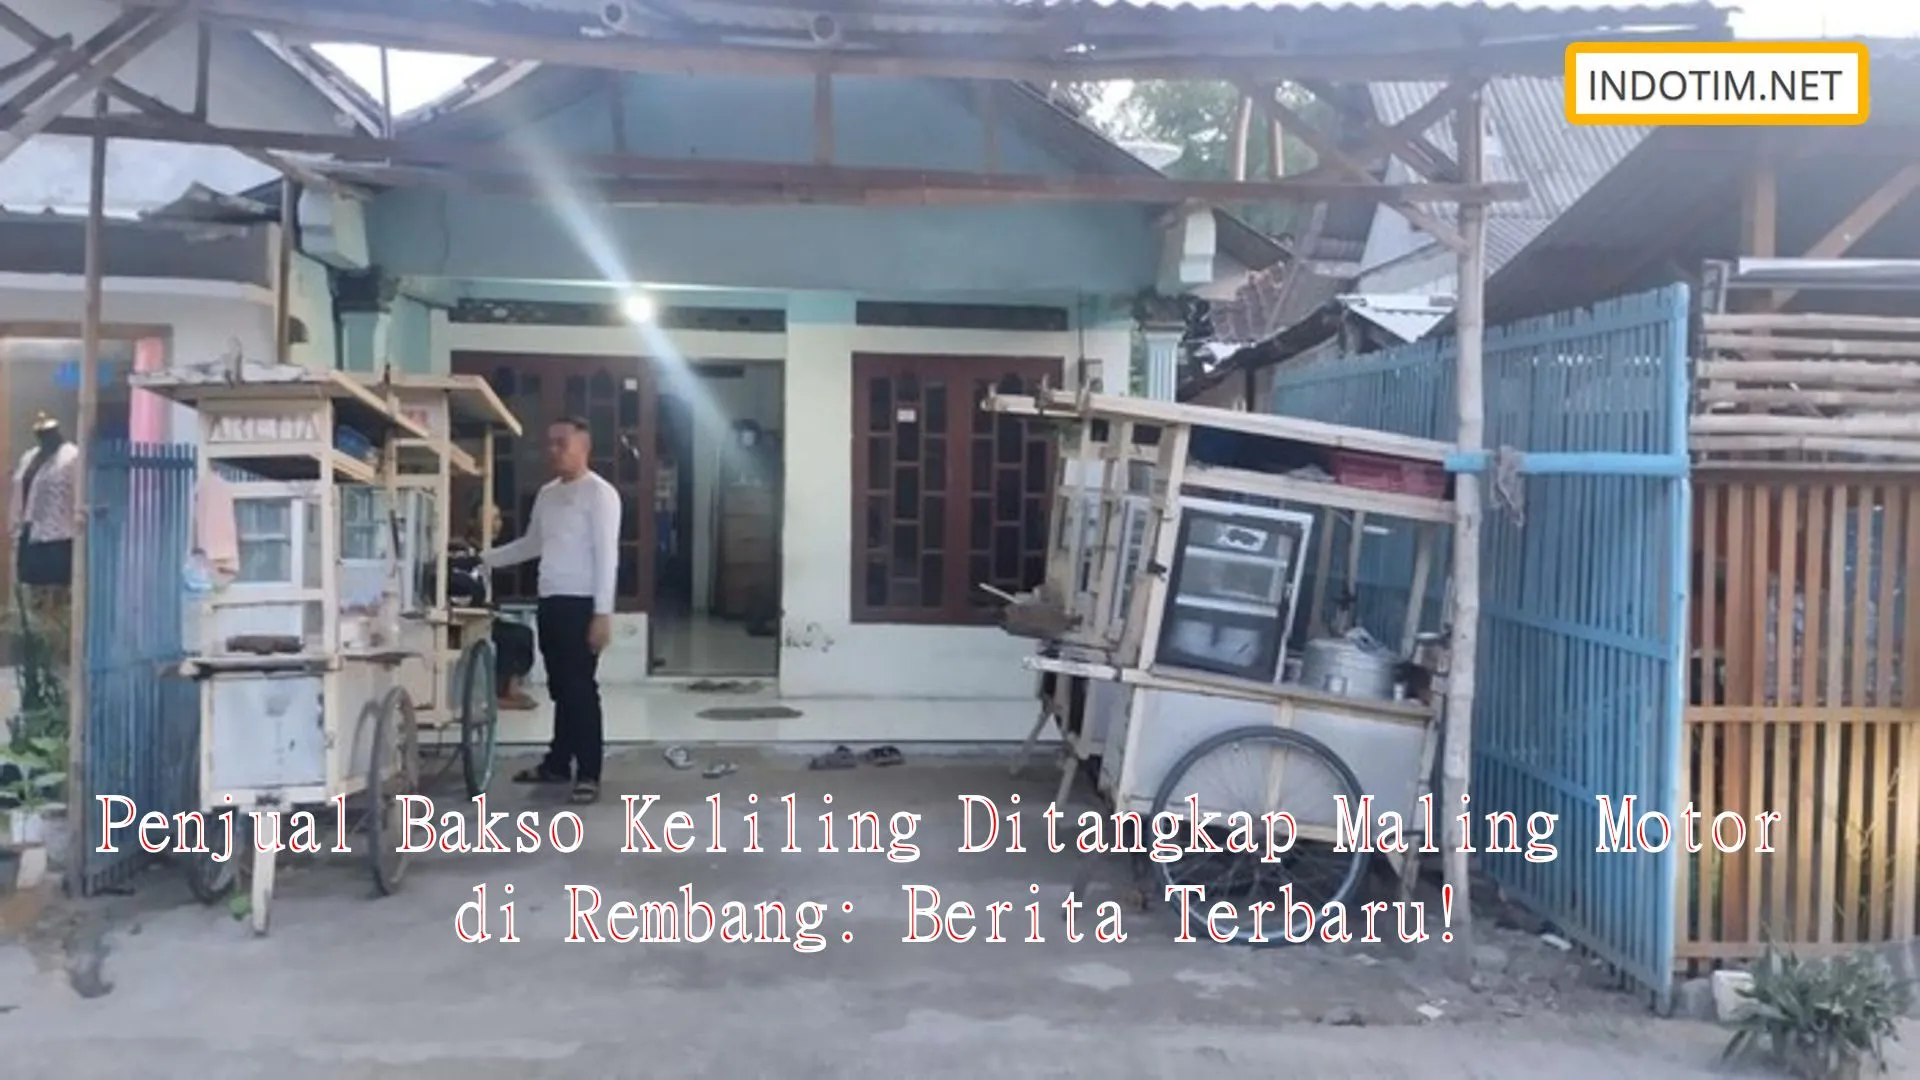 Penjual Bakso Keliling Ditangkap Maling Motor di Rembang: Berita Terbaru!